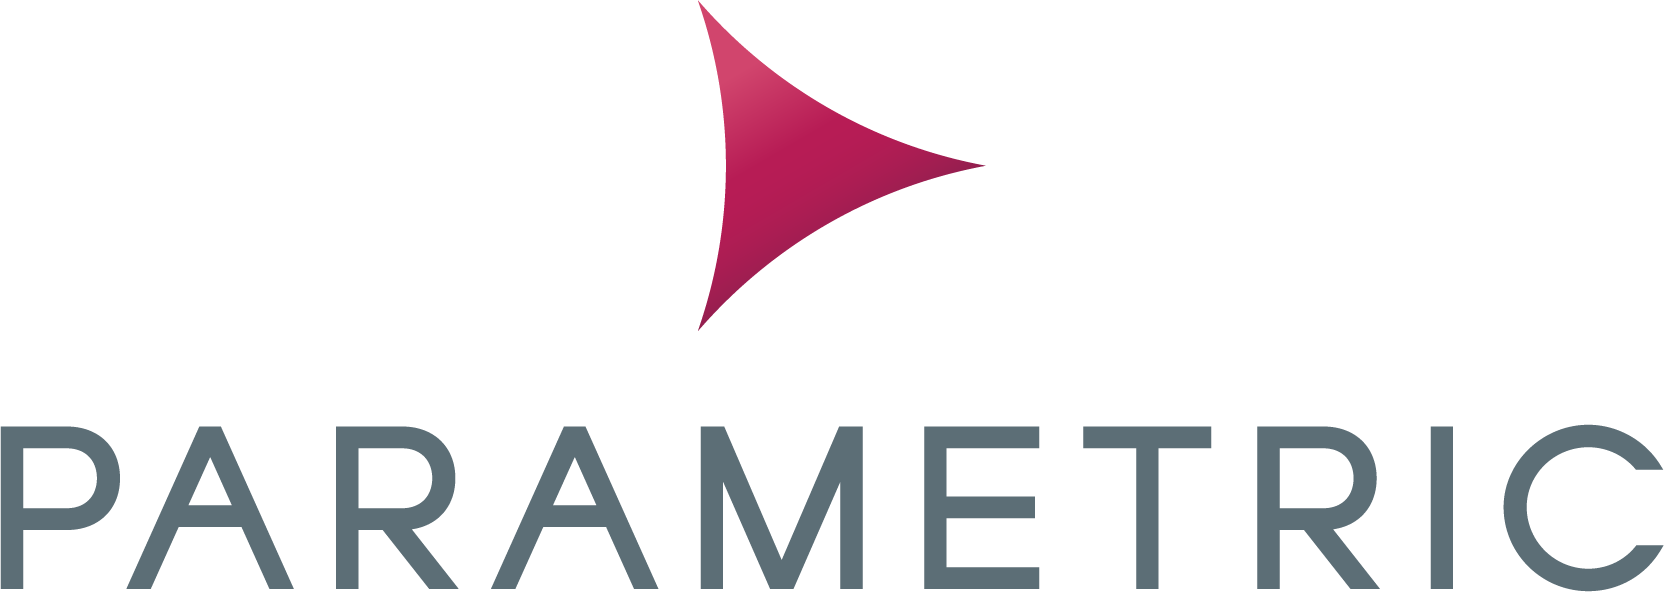 Parametric logo